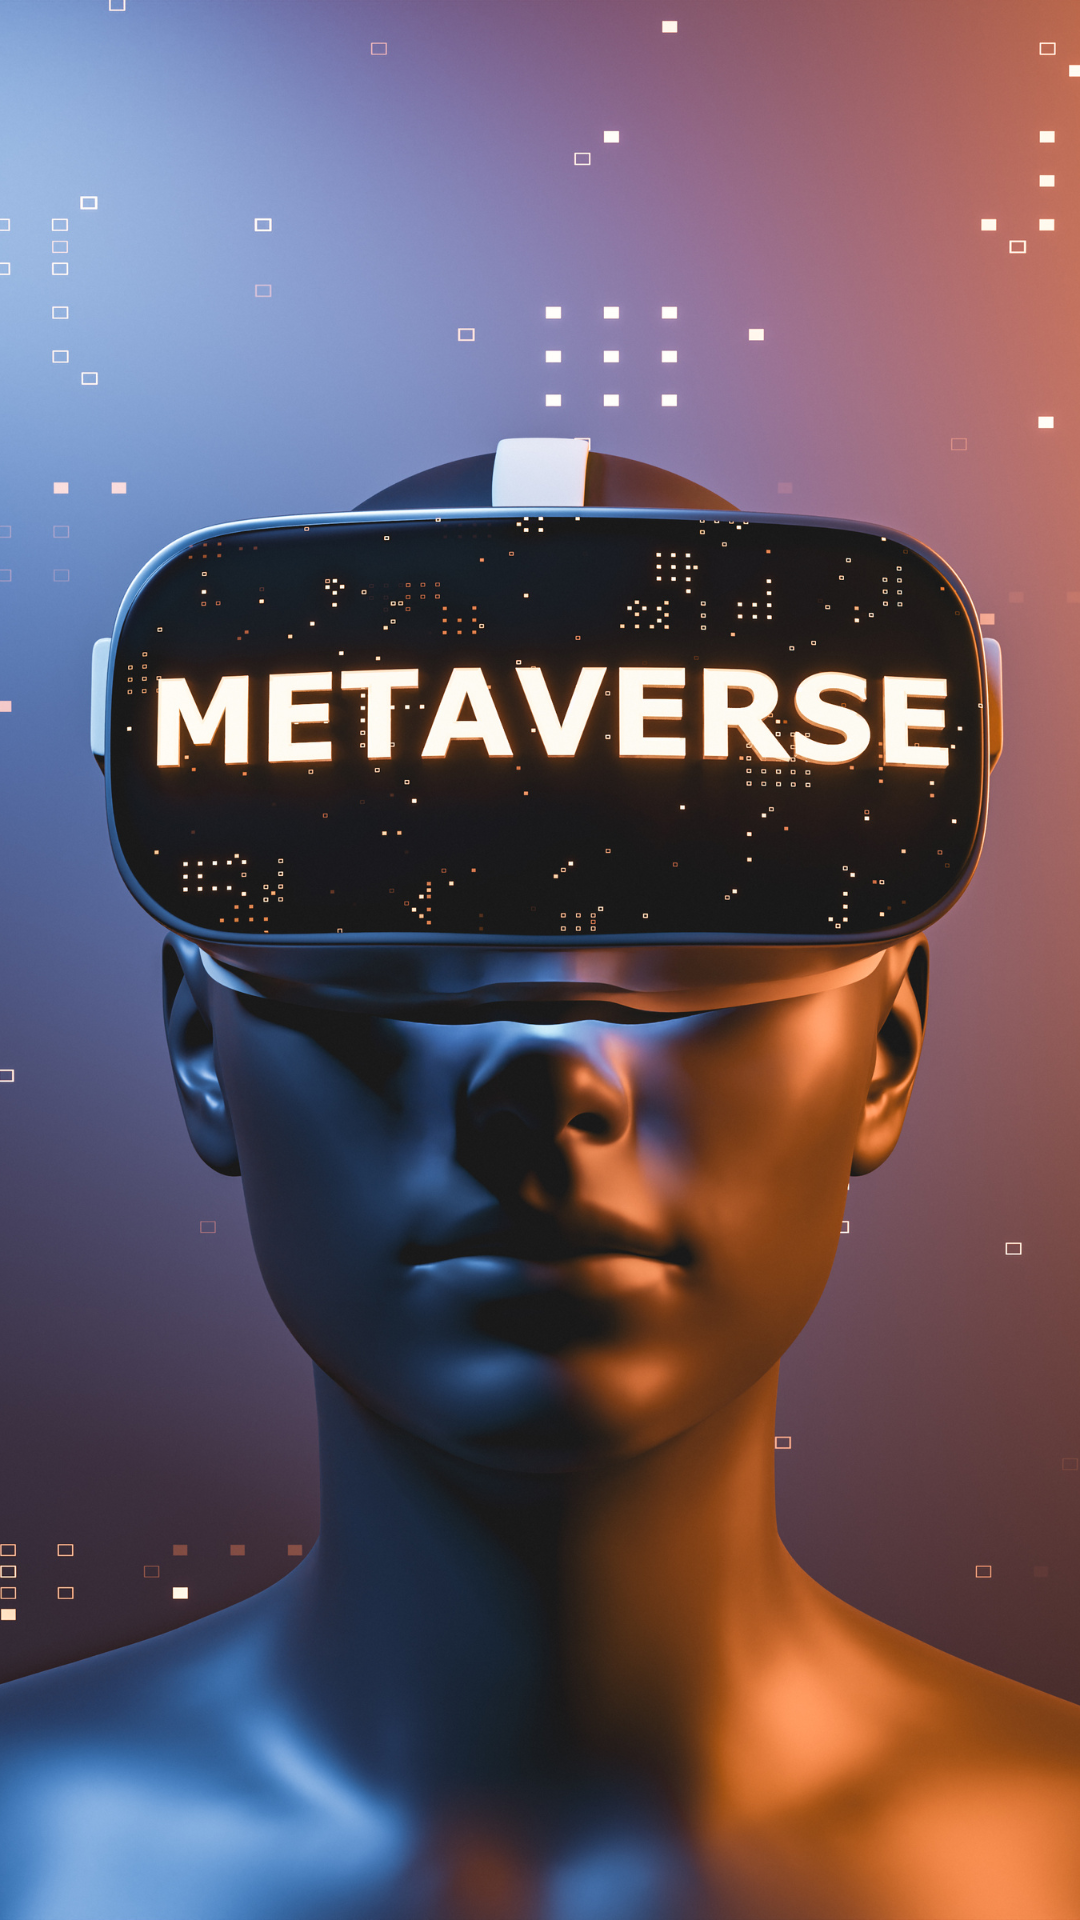 Metaverse becoming a mega failure